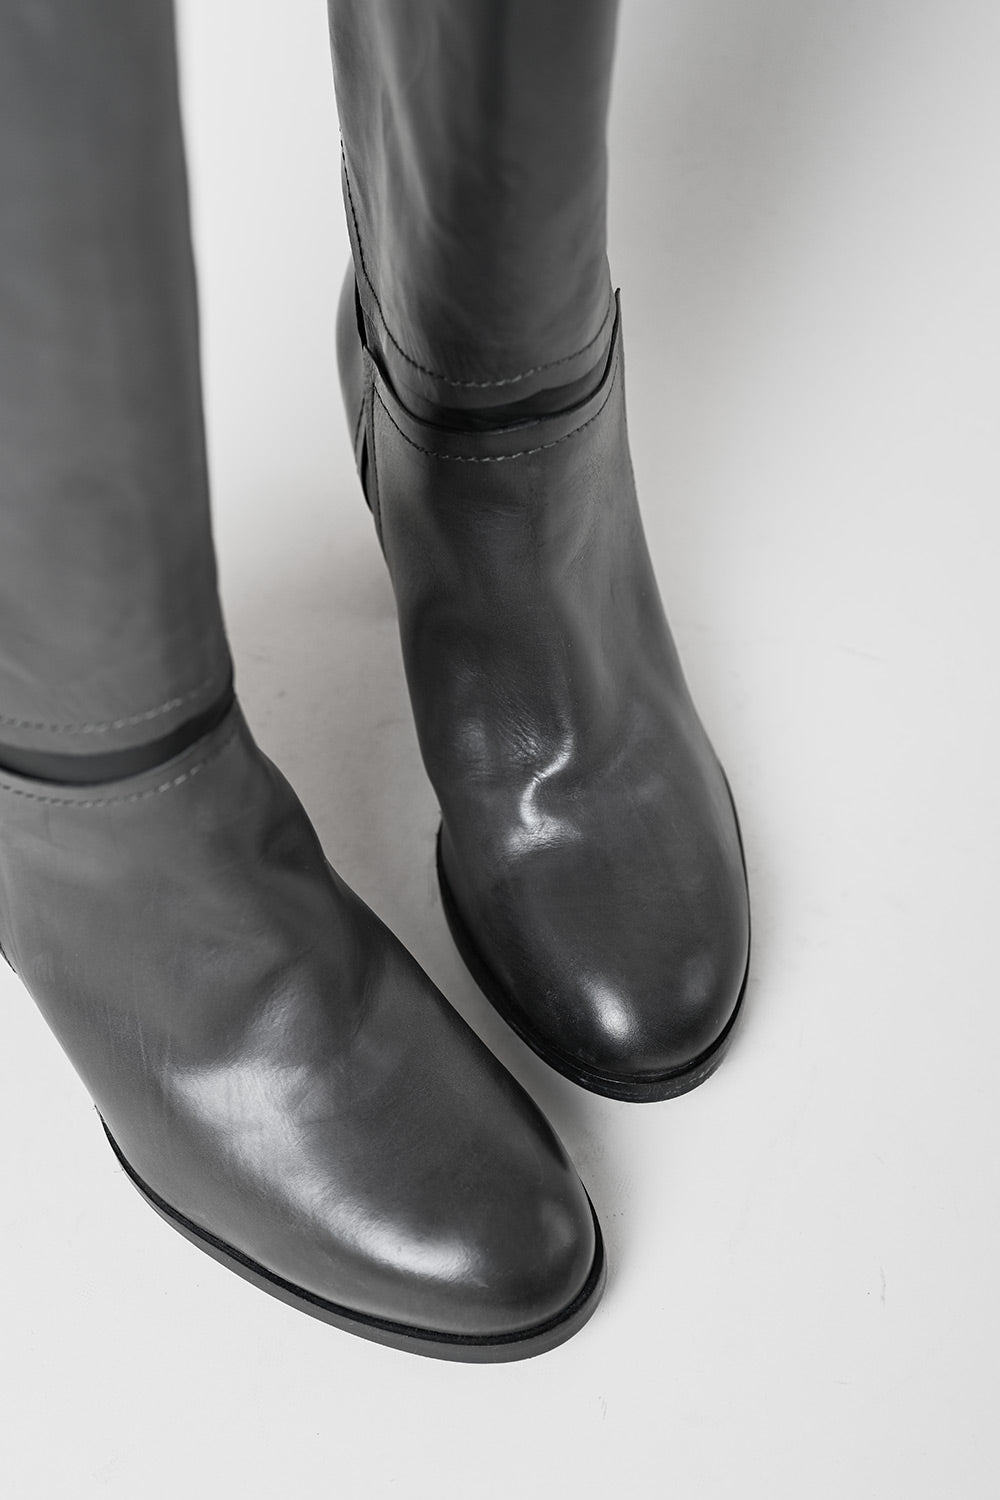 Nura Piu Boots - grey